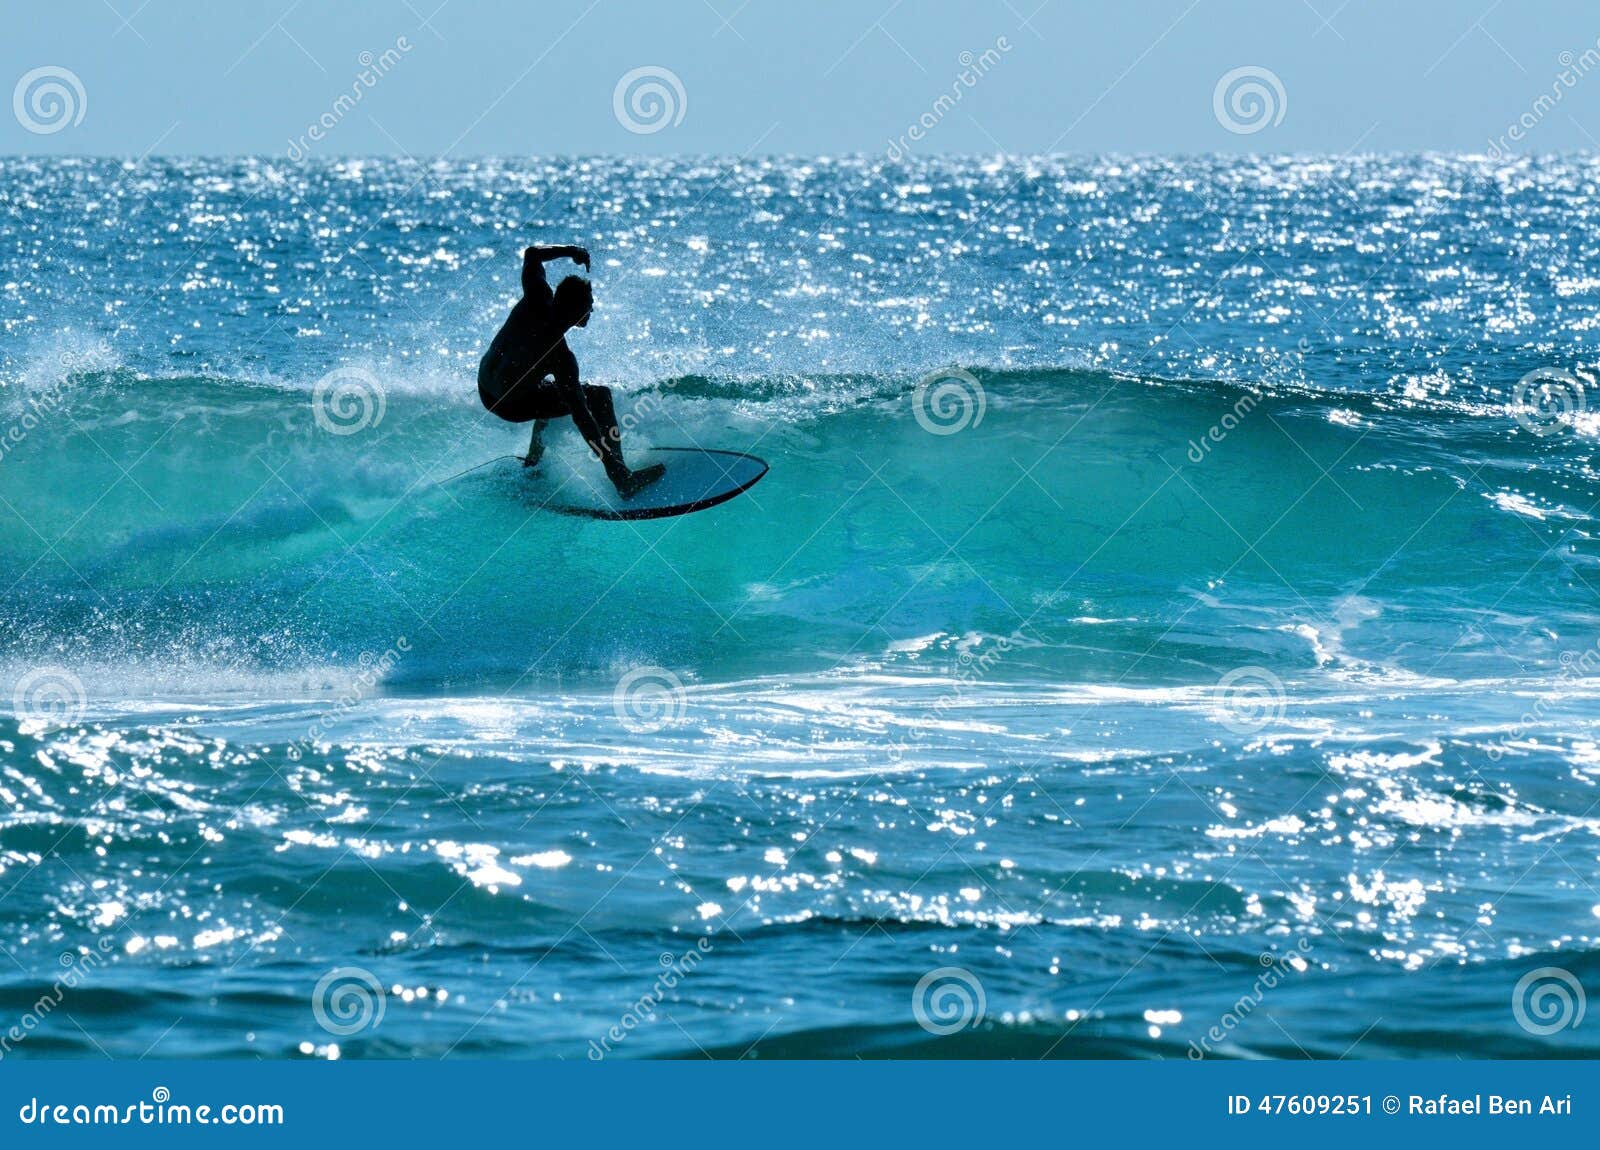 surfer in surfers paradise gold coast australia